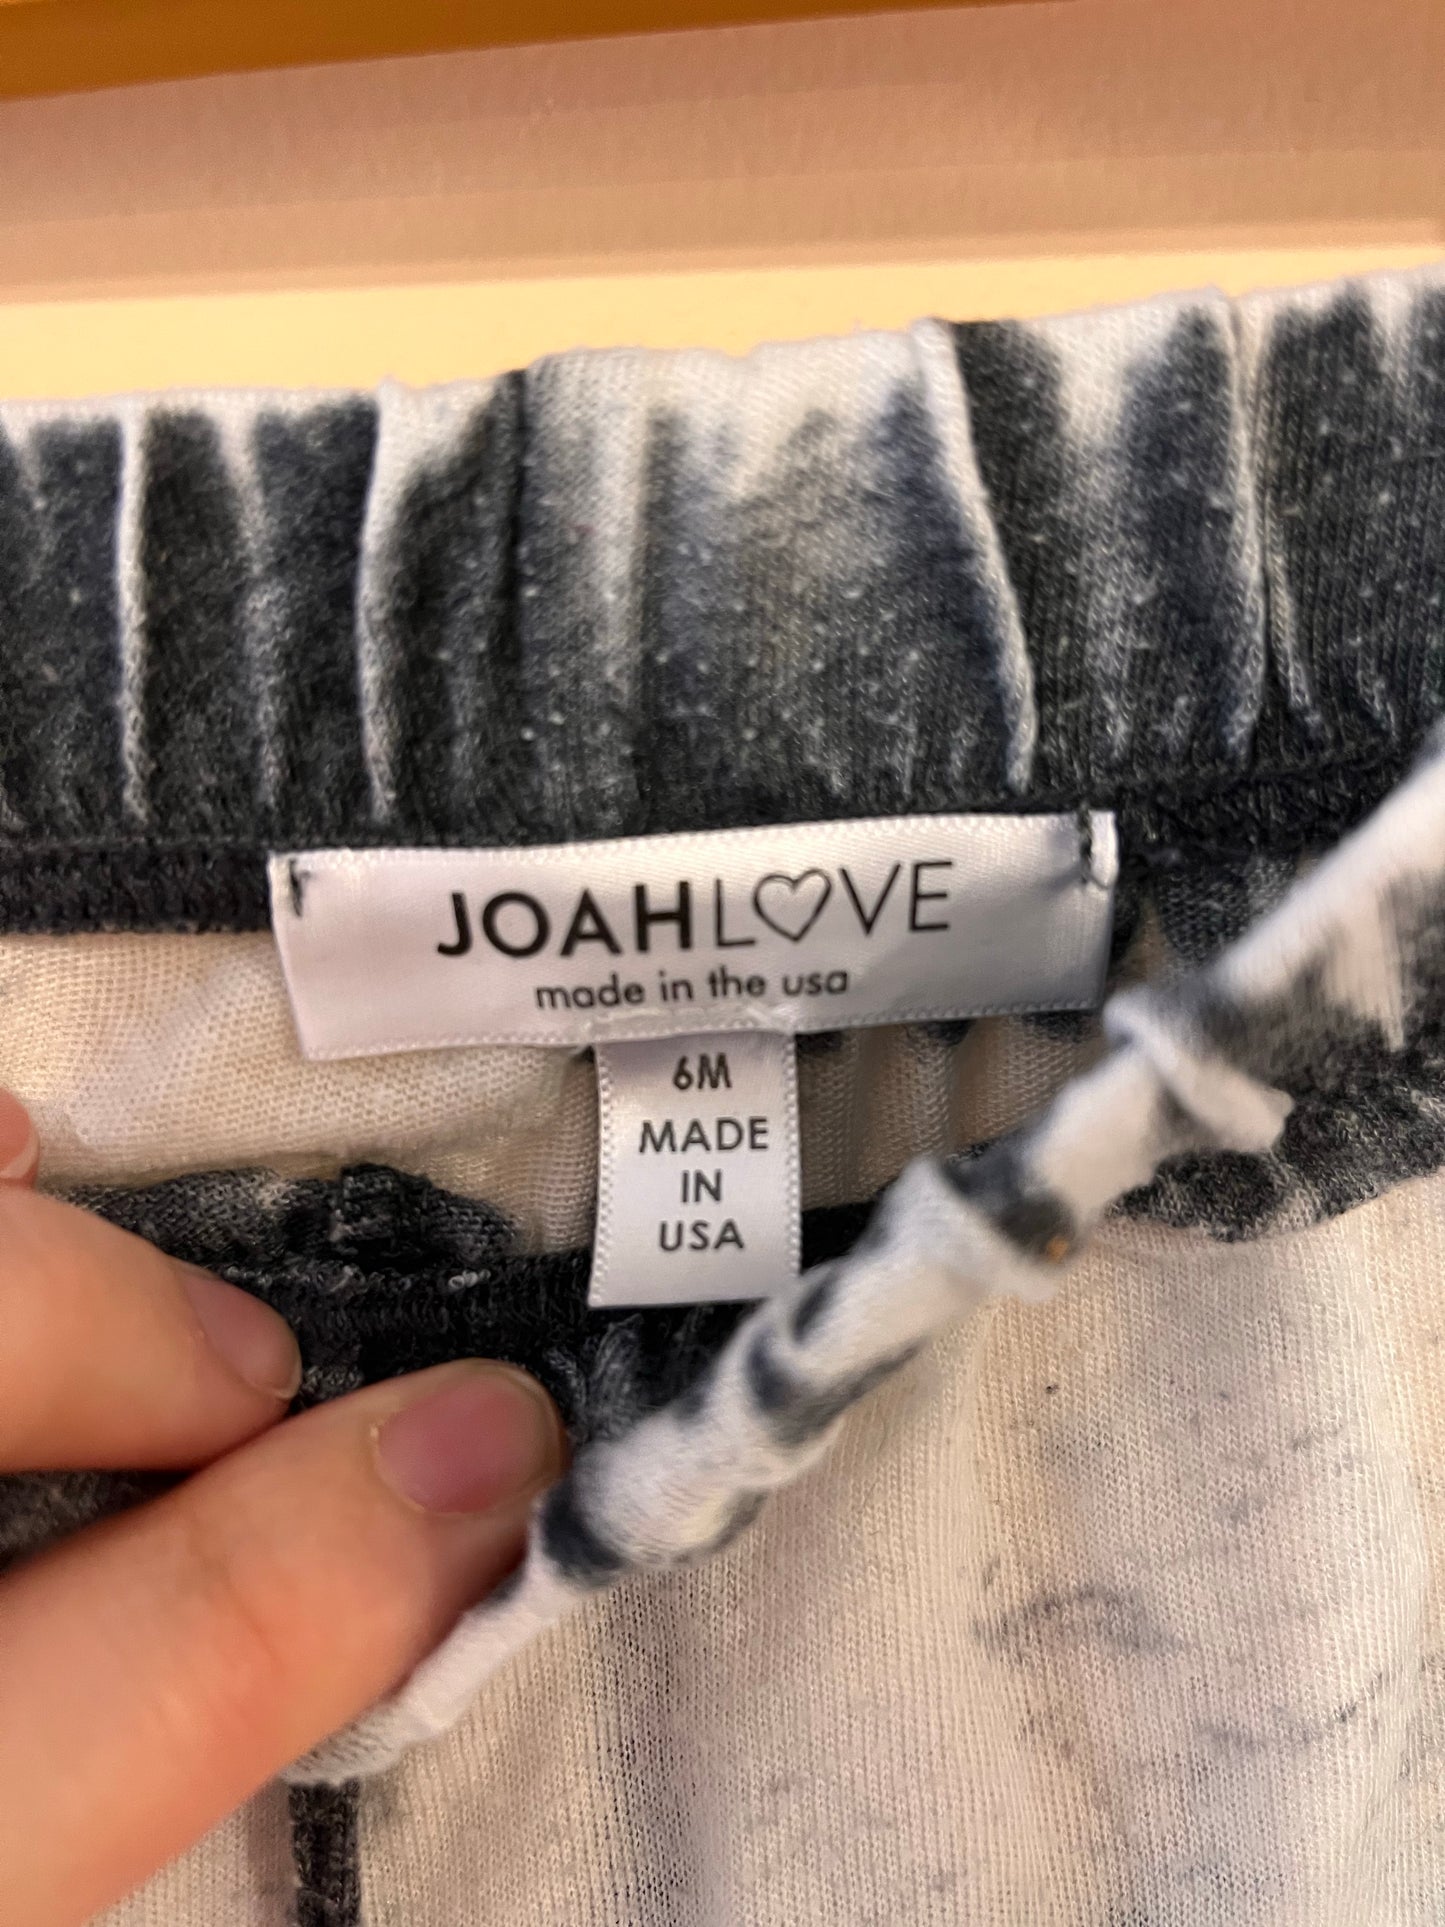 Joah Love Lightweight "Acid Wash" Pants (6M)